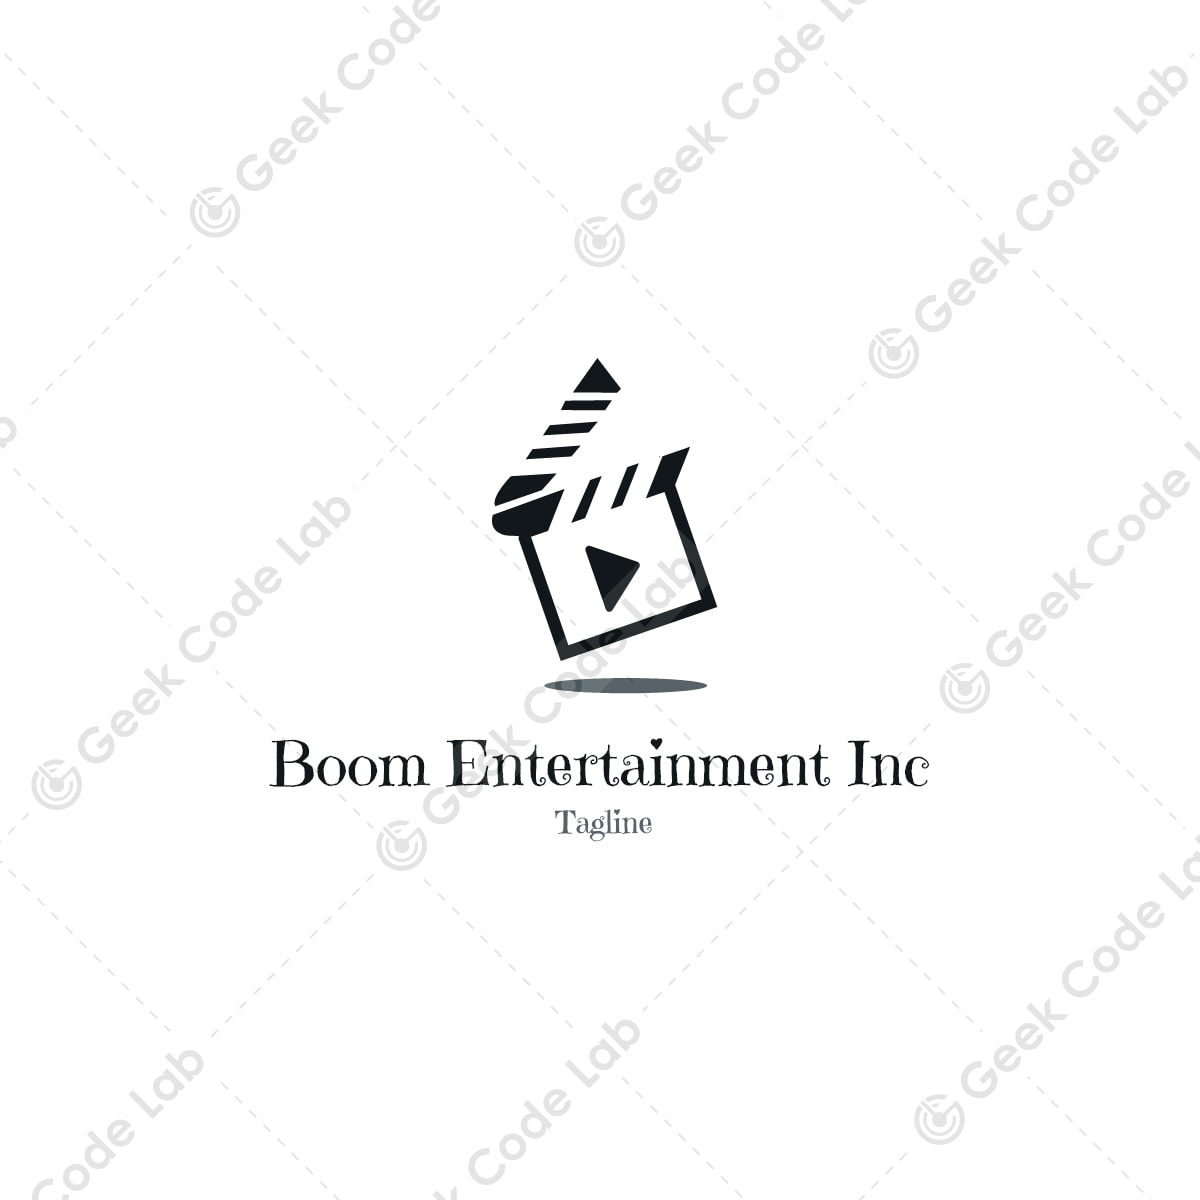 Boom Entertainment Inc